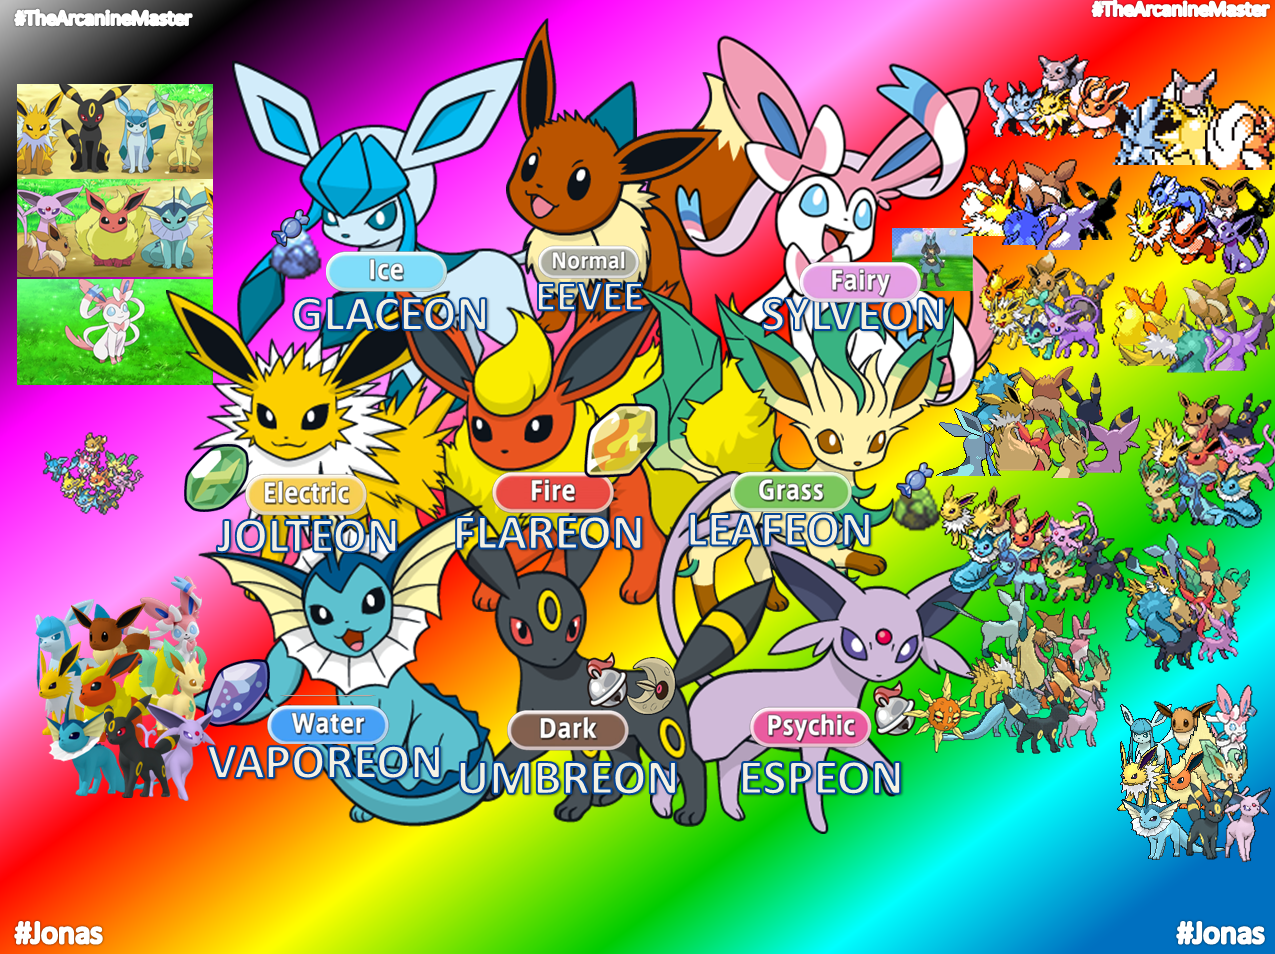 Curiosidades Pokémon: Eevee, Vaporeon, Jolteon e Flareon - Pokémothim